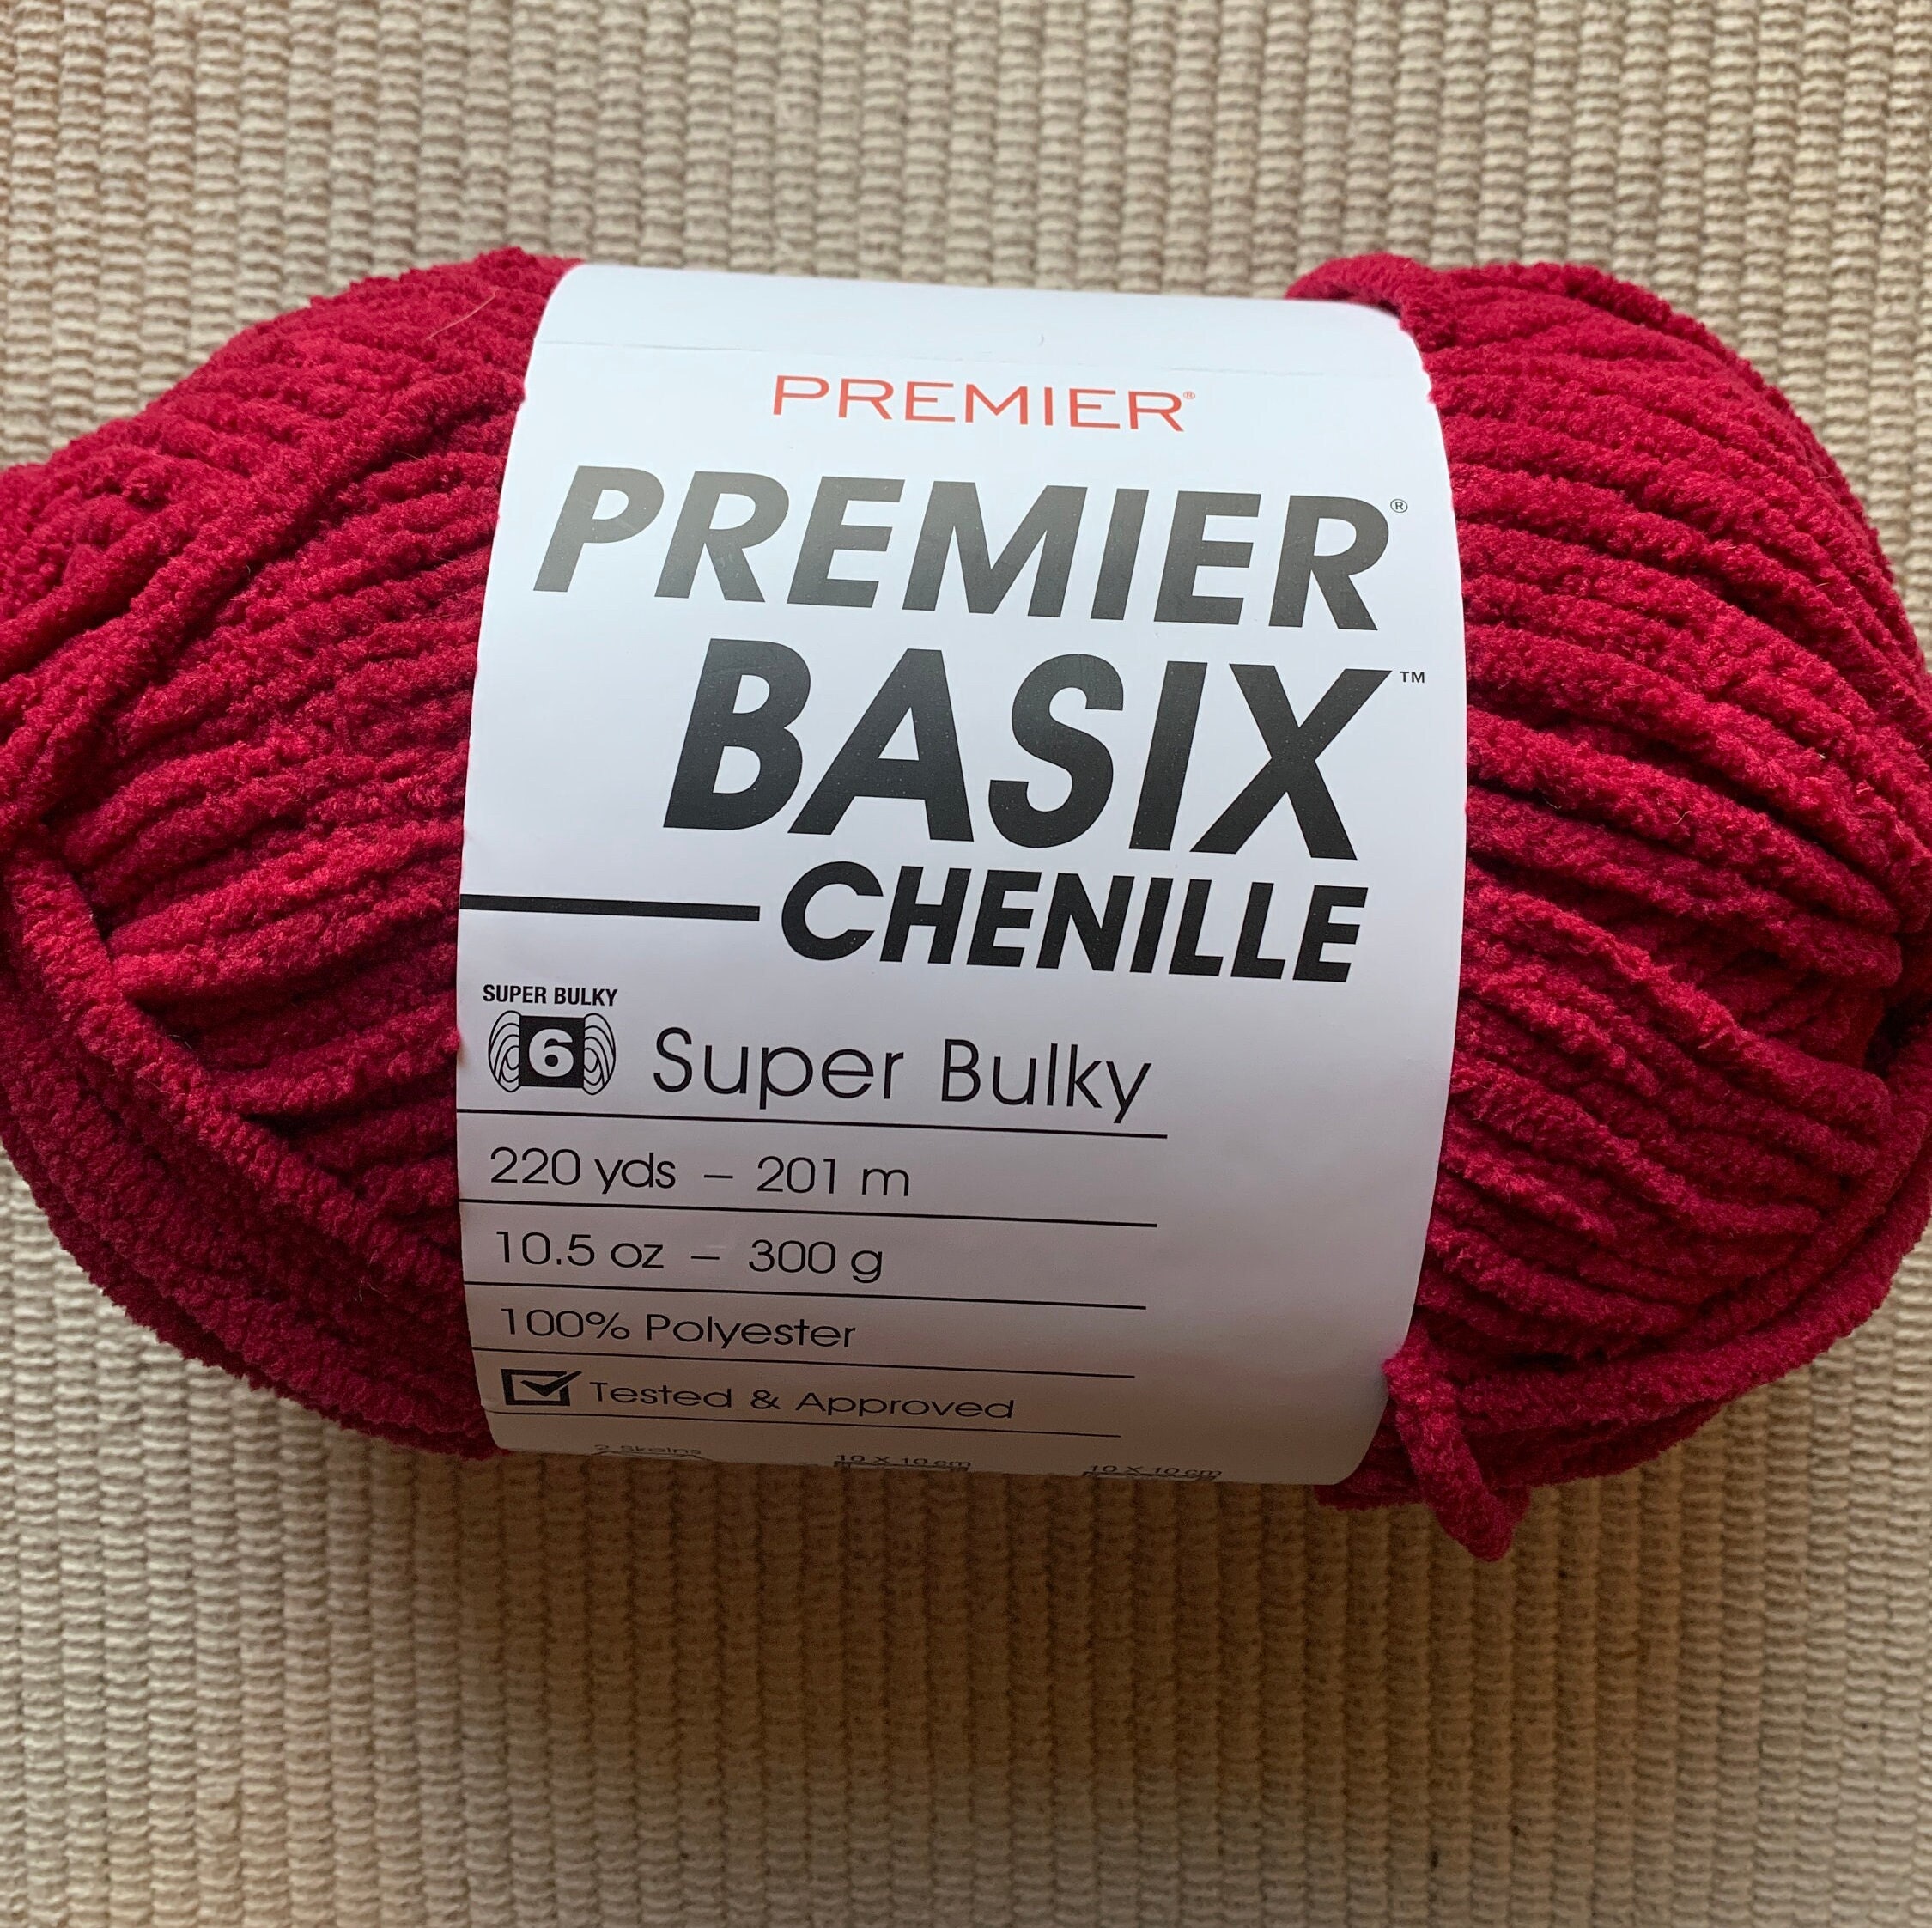  Premier Yarns Basix Chenille Yarn, Made of Polyester, Super Bulky  Yarn for Crocheting and Knitting, Mustard, 10.5 oz, 220 Yards